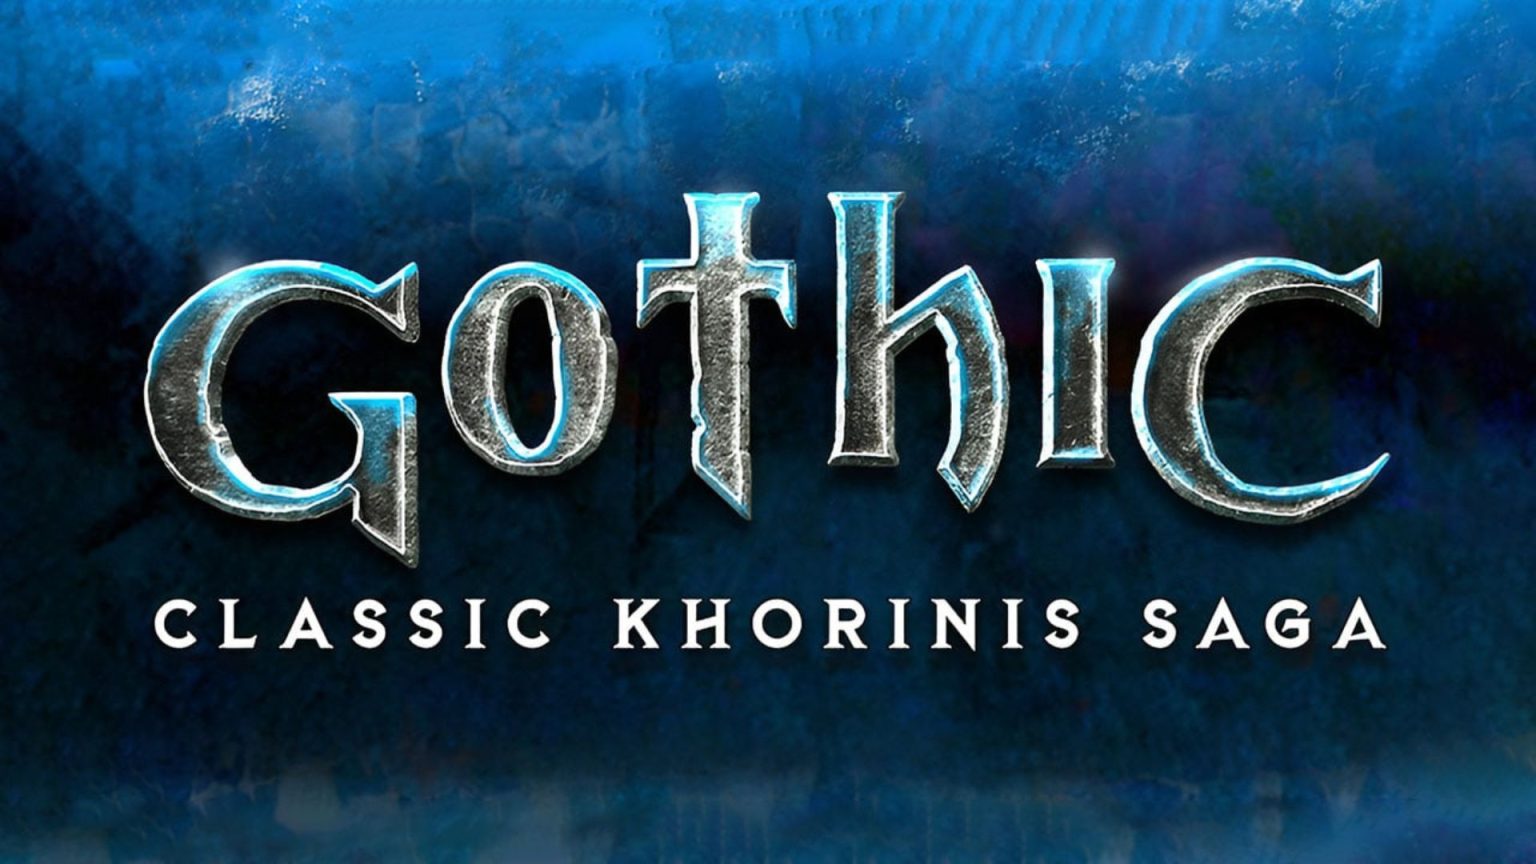 Gothic Classic Khorinis Saga Collection lanseres på Nintendo Switch i juni